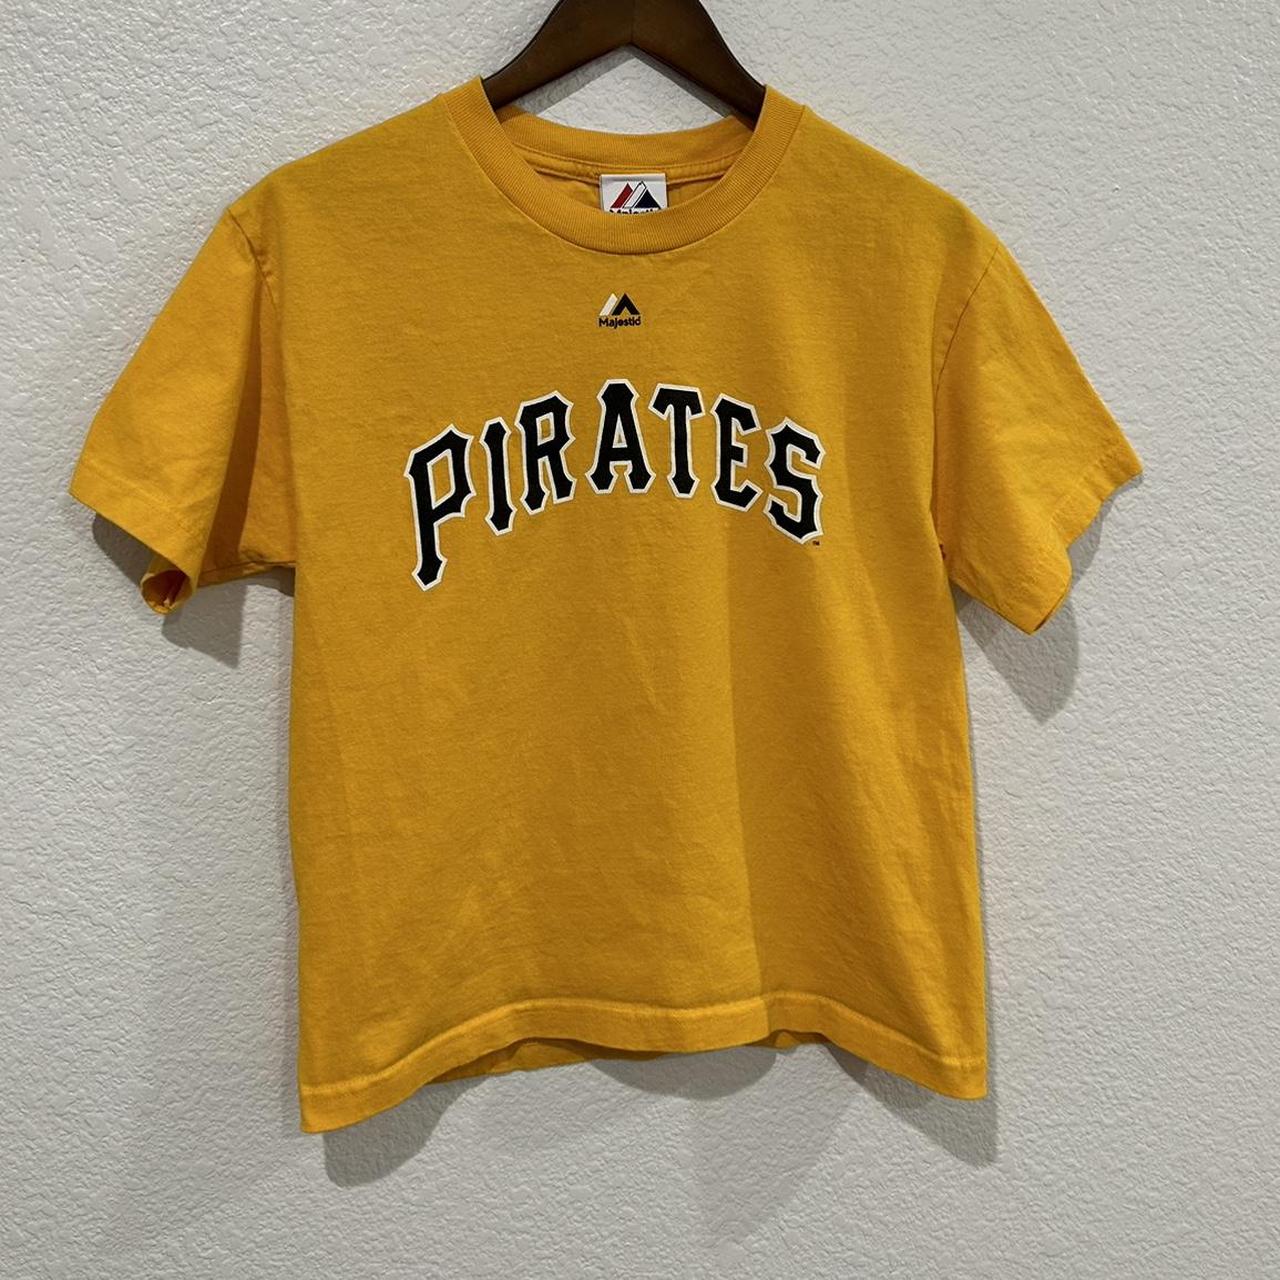 yellow pirates shirt